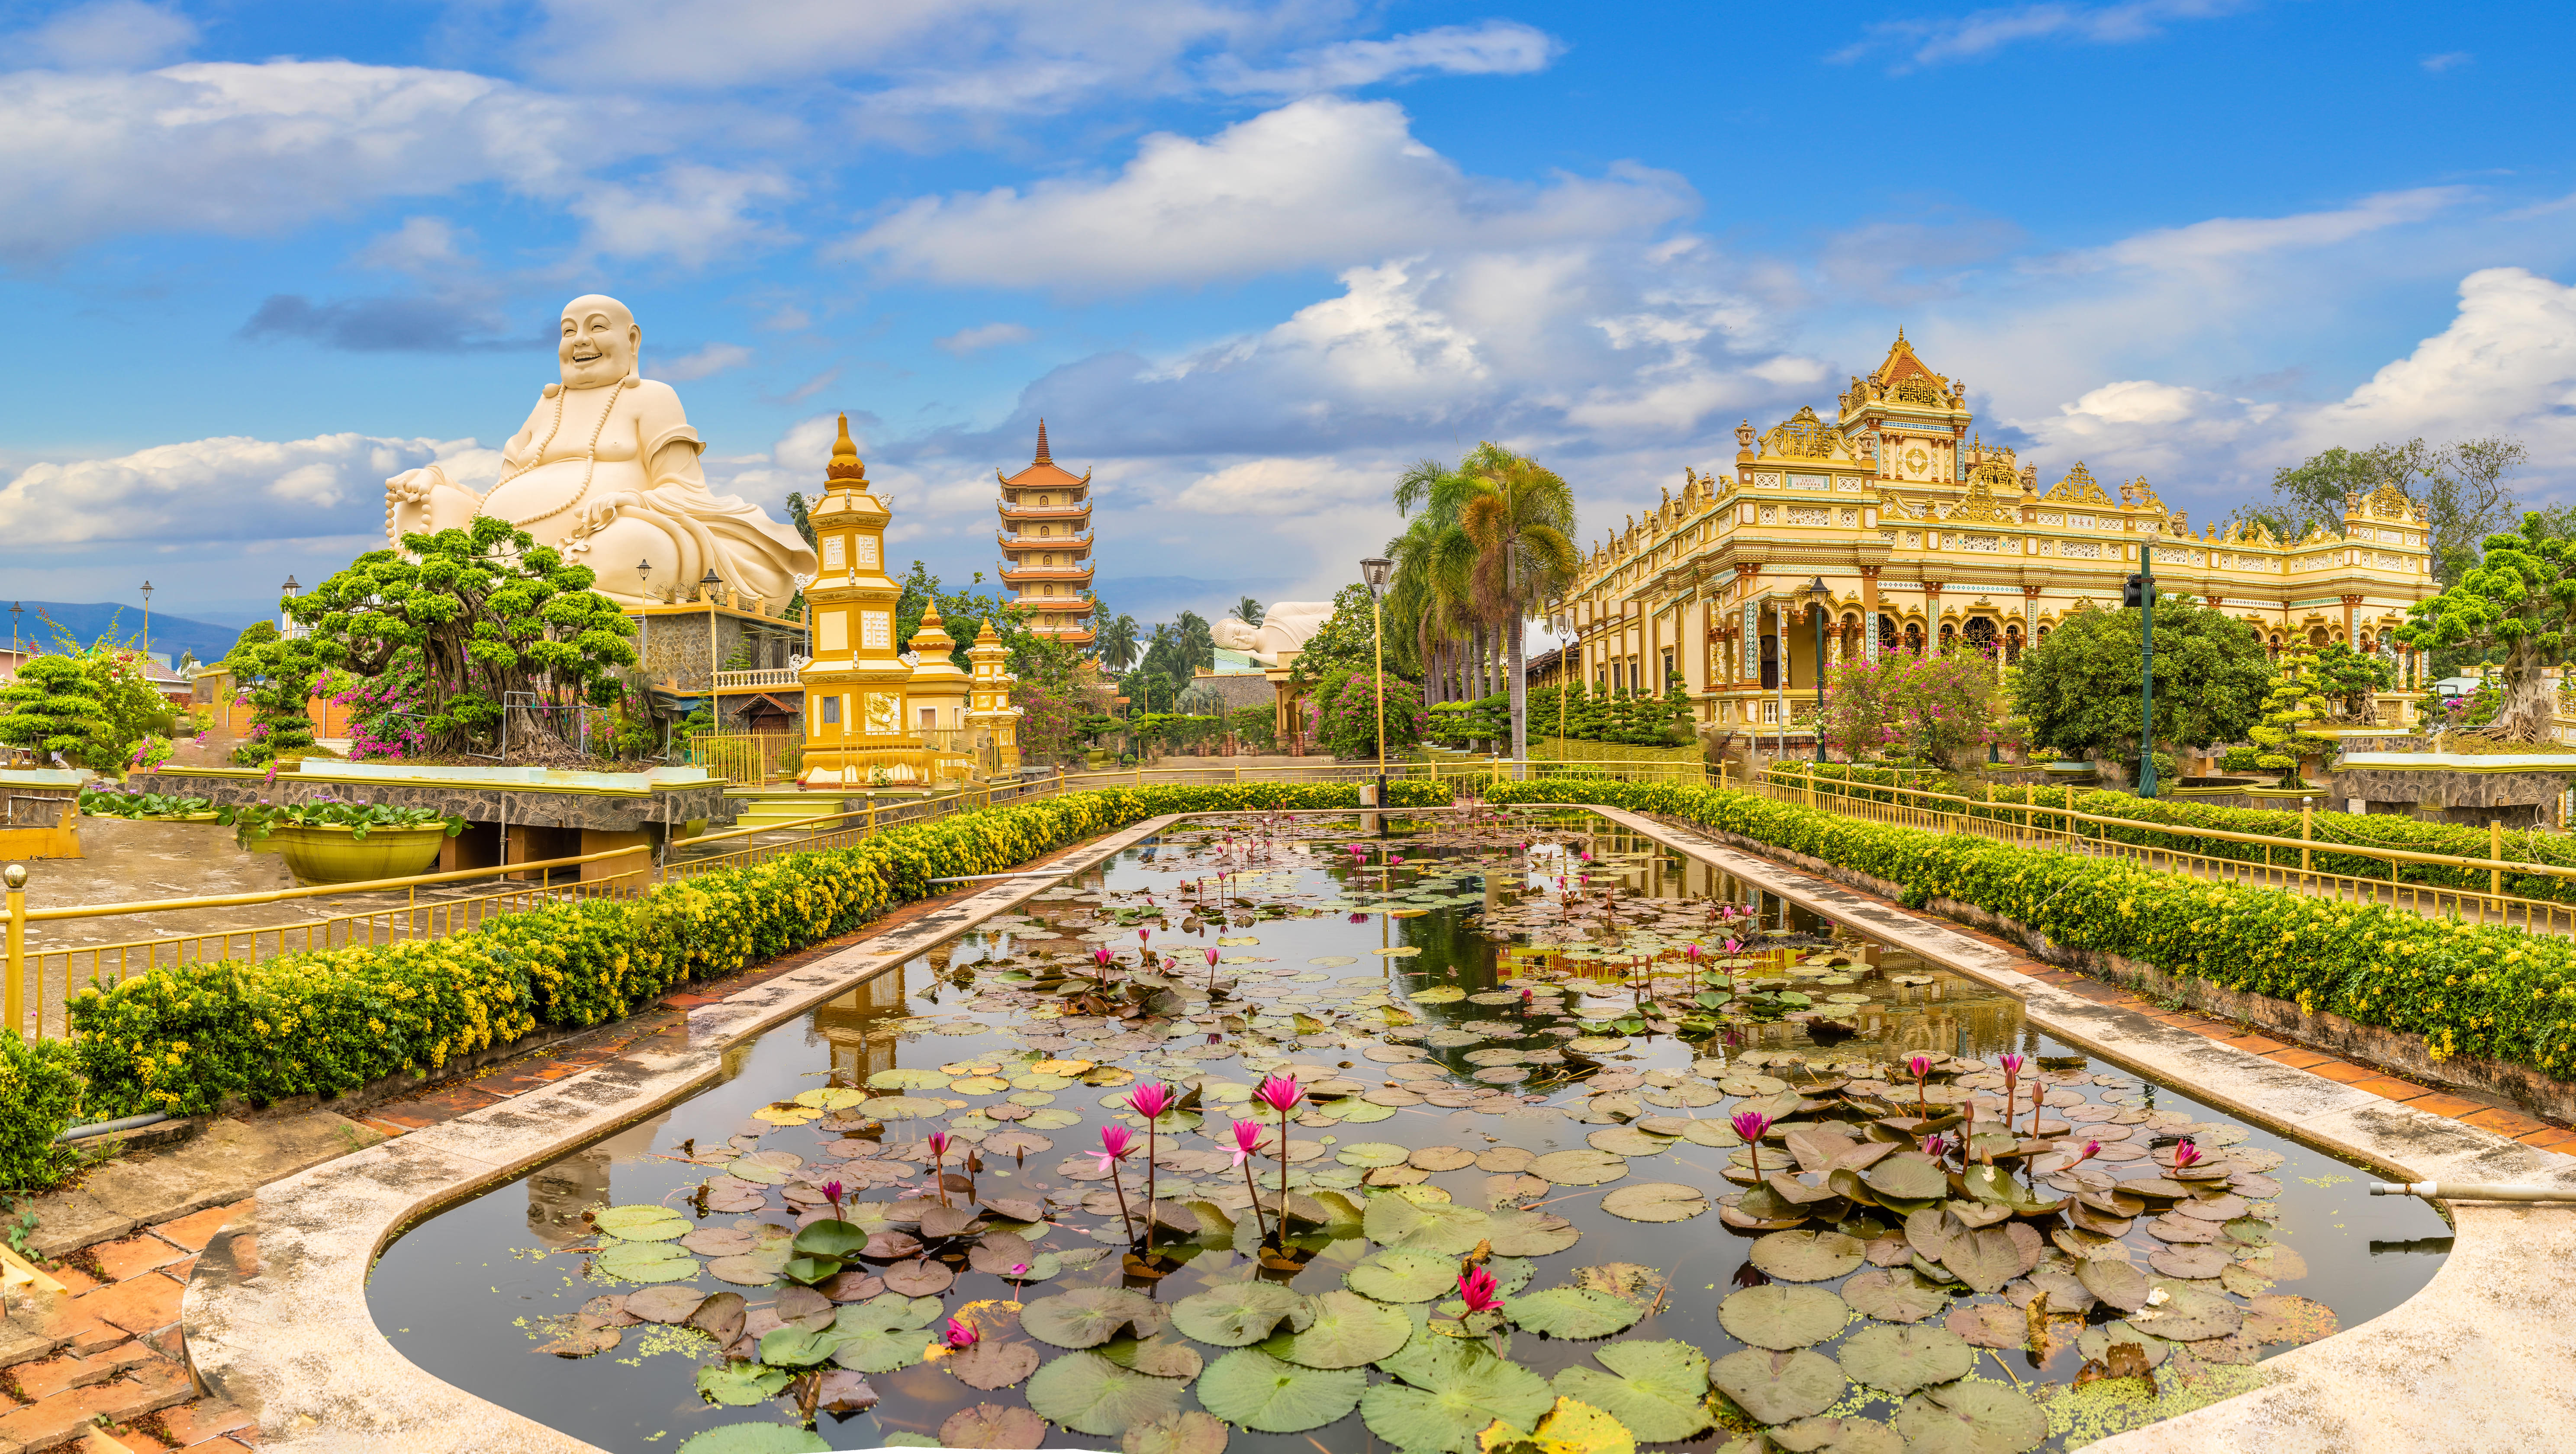 Visit the beautiful Buddhist temple - Trang pagoda